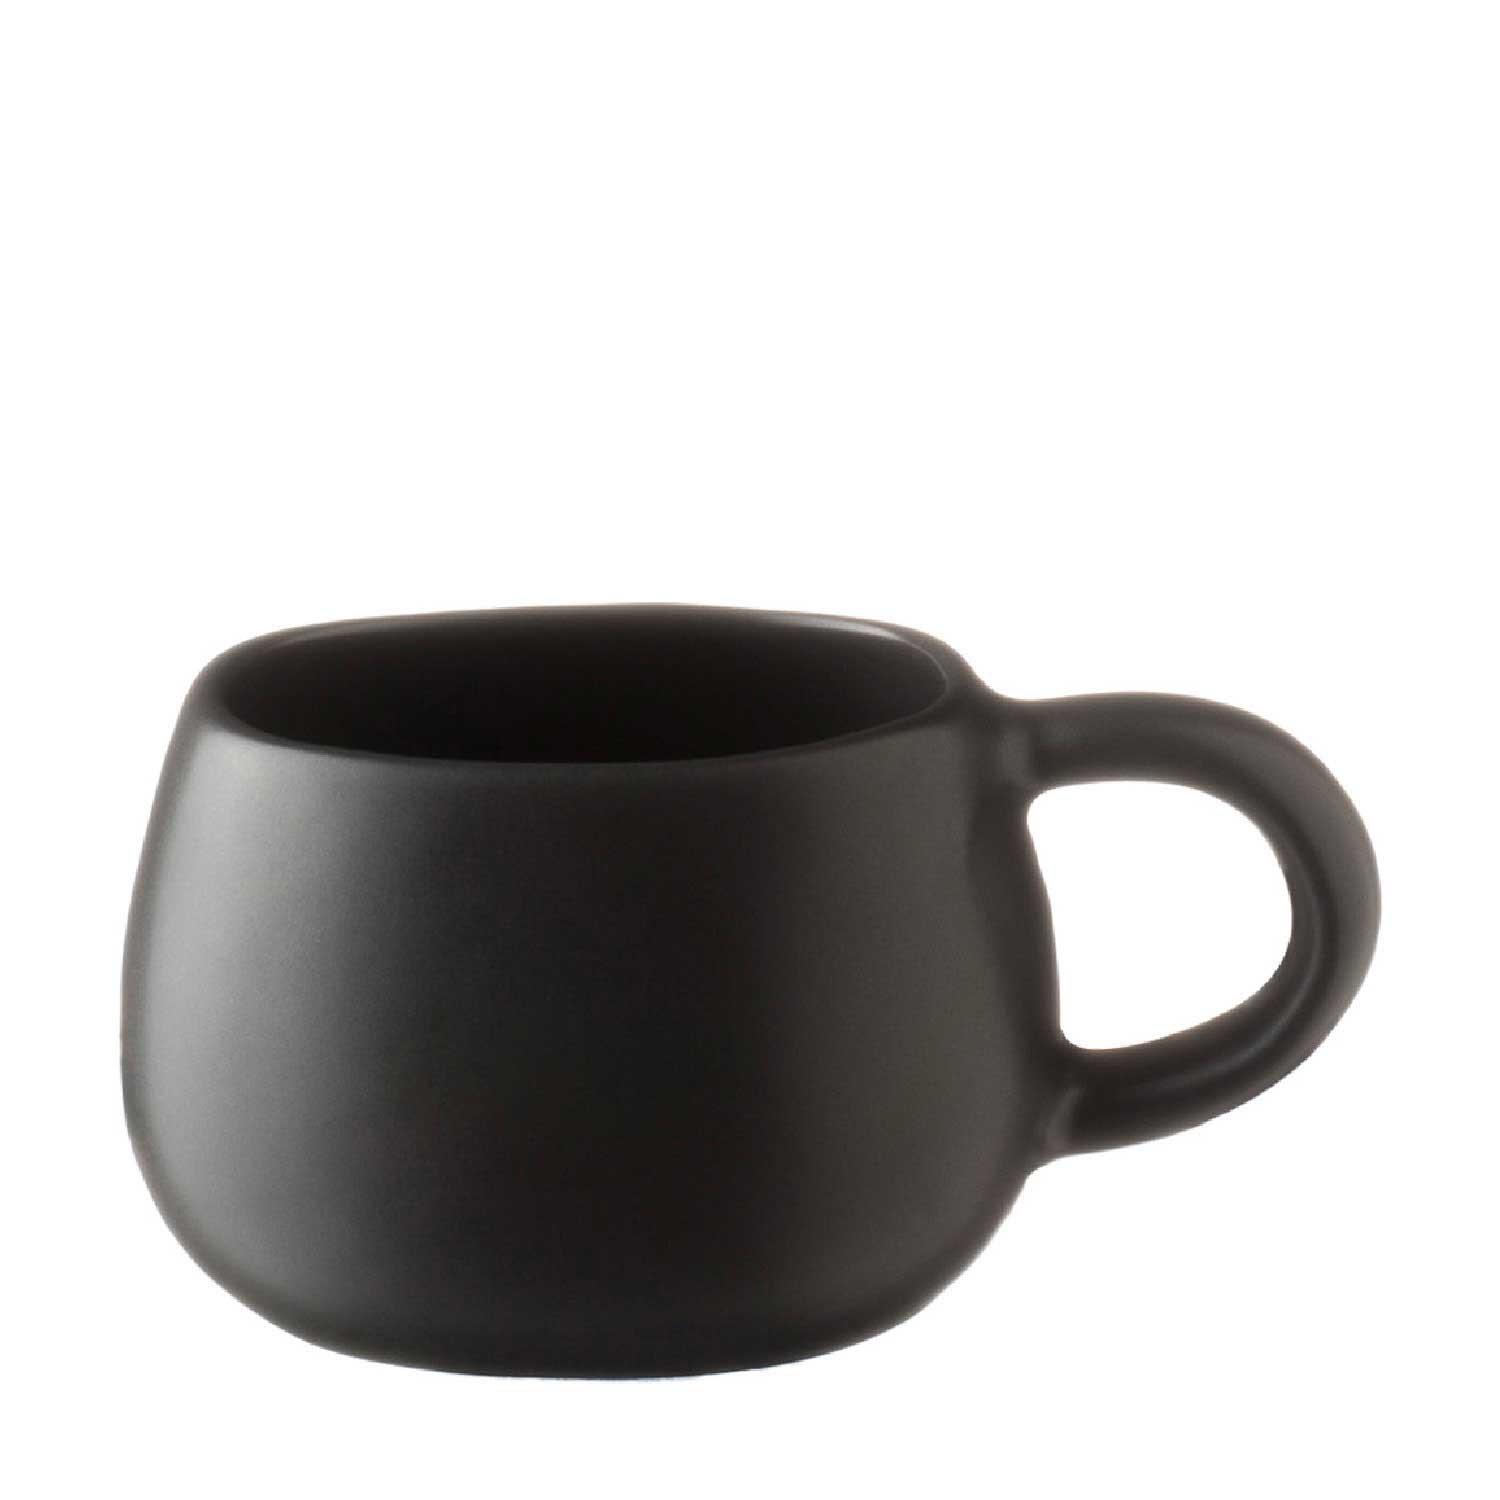 HANDBAG COFFE/TEA CUP 2